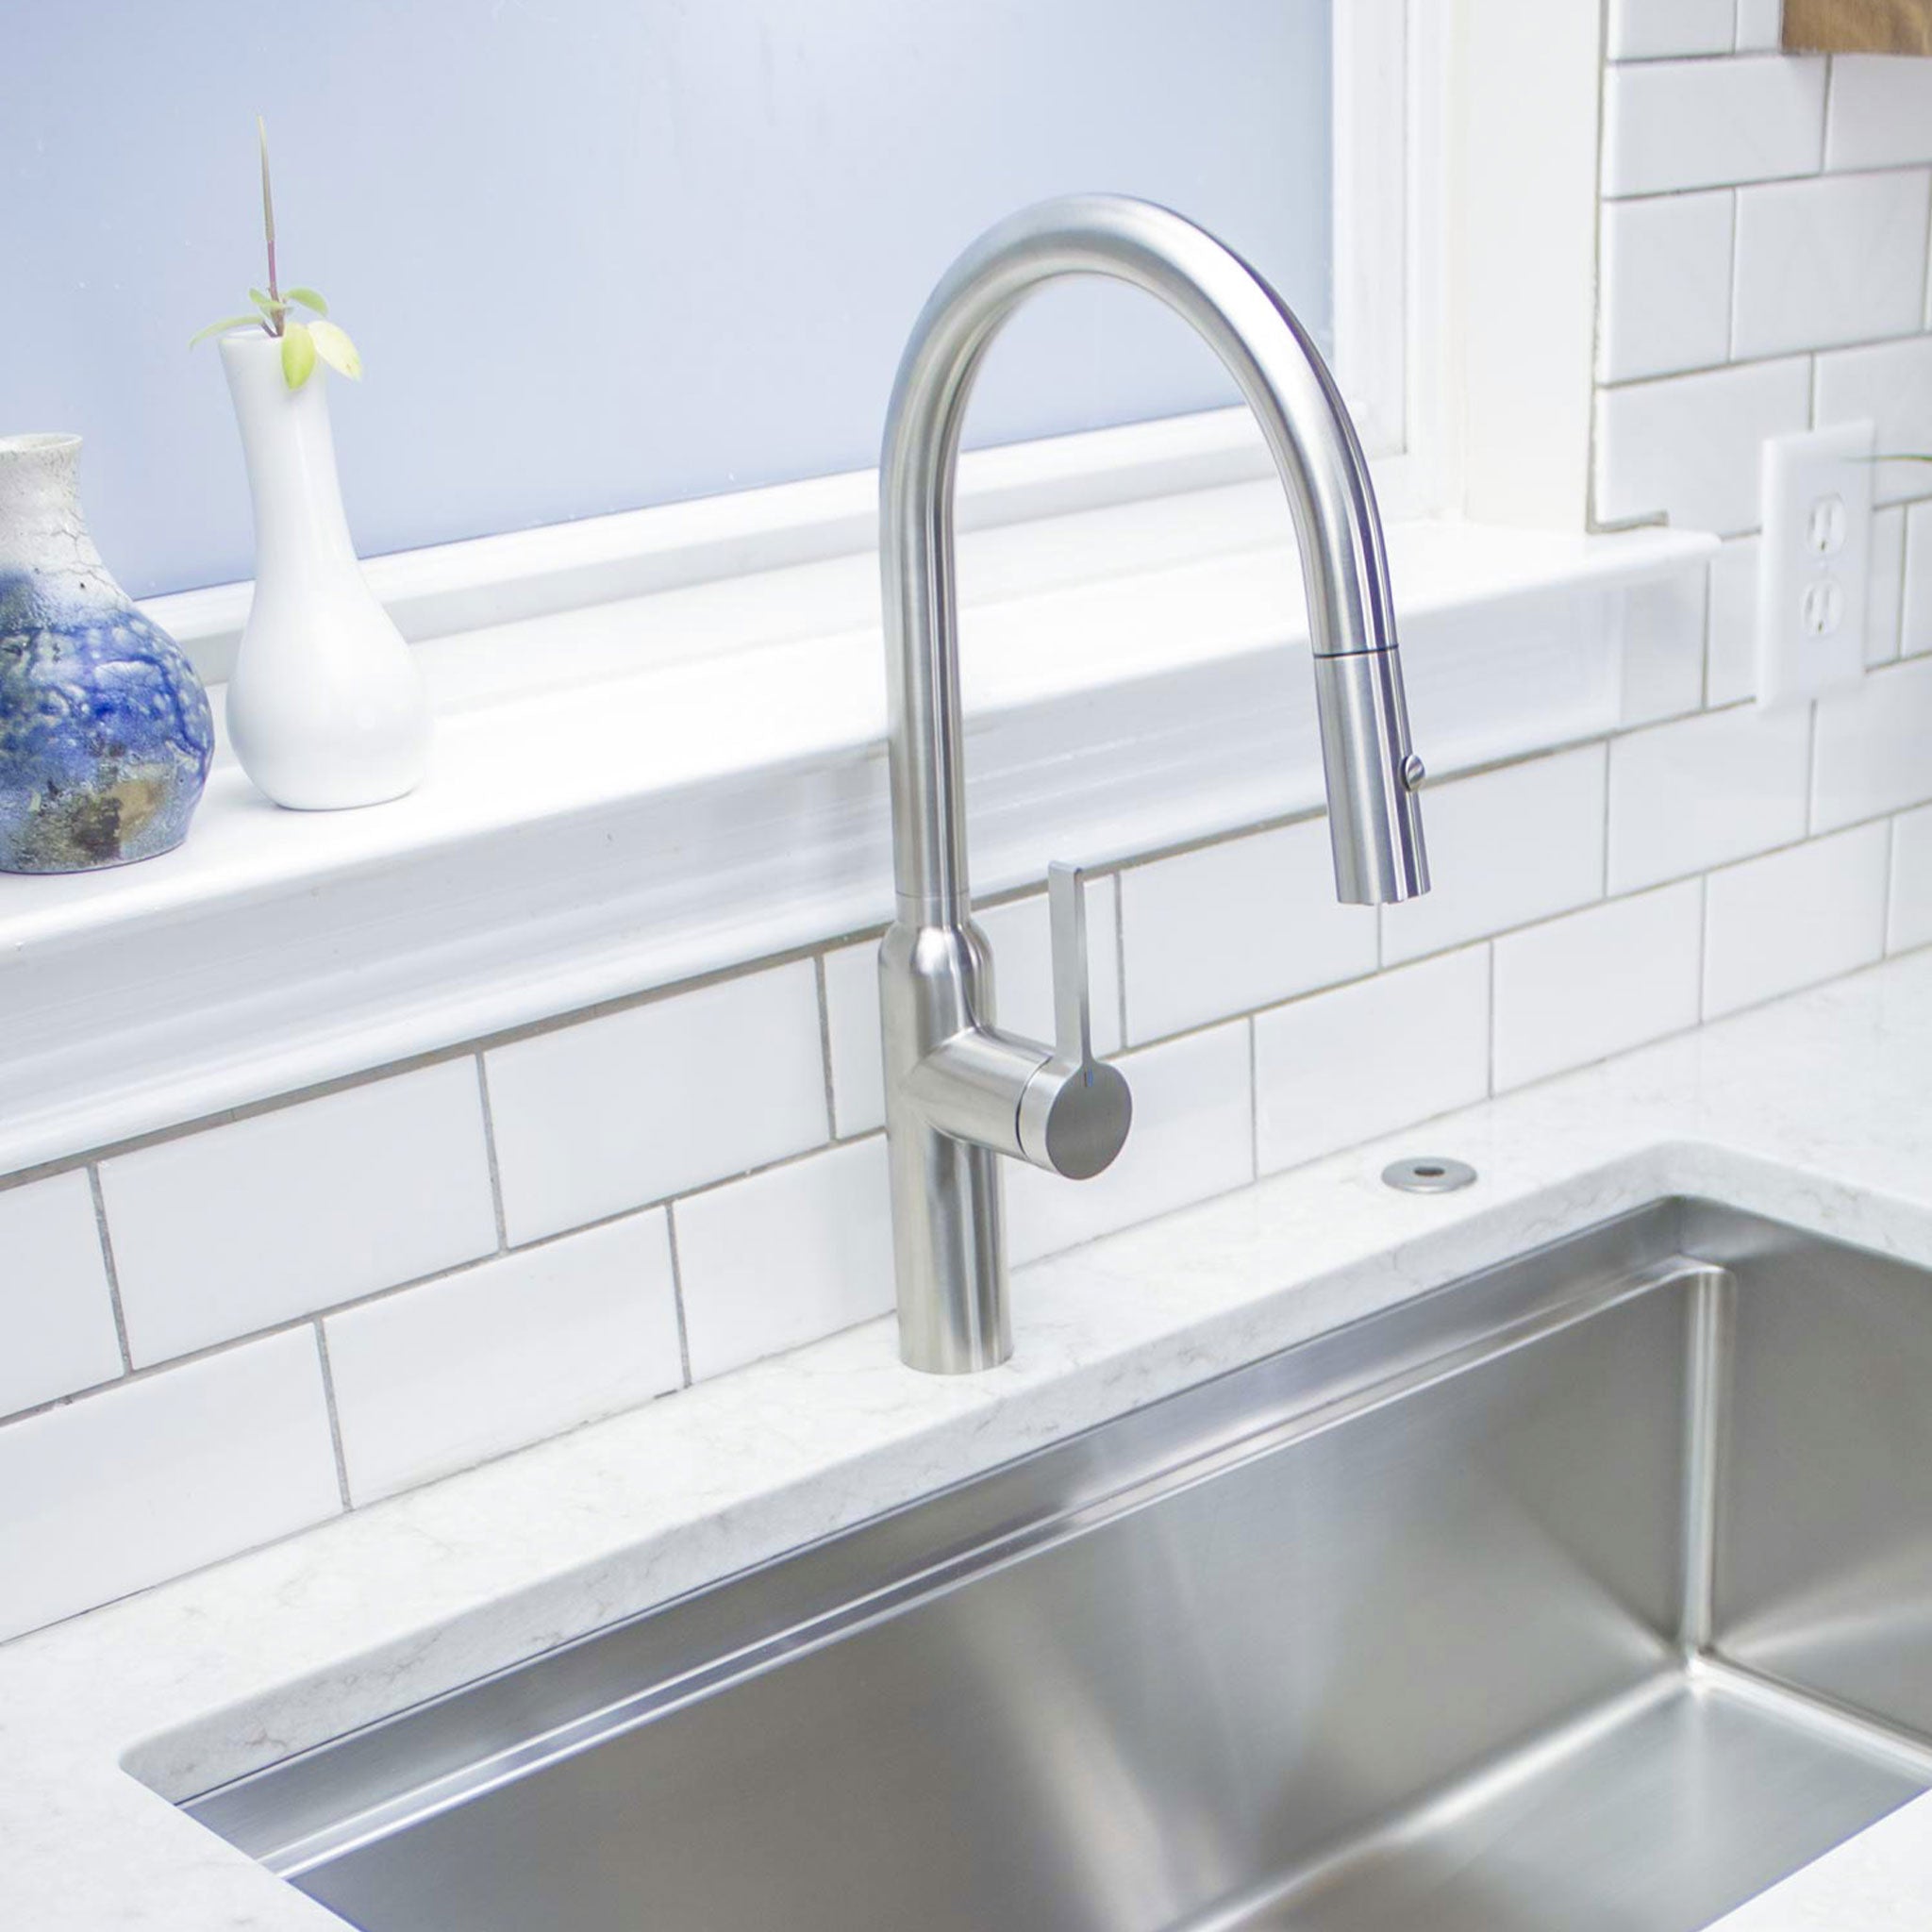 Paulette Kitchen Faucet Create Good Sinks